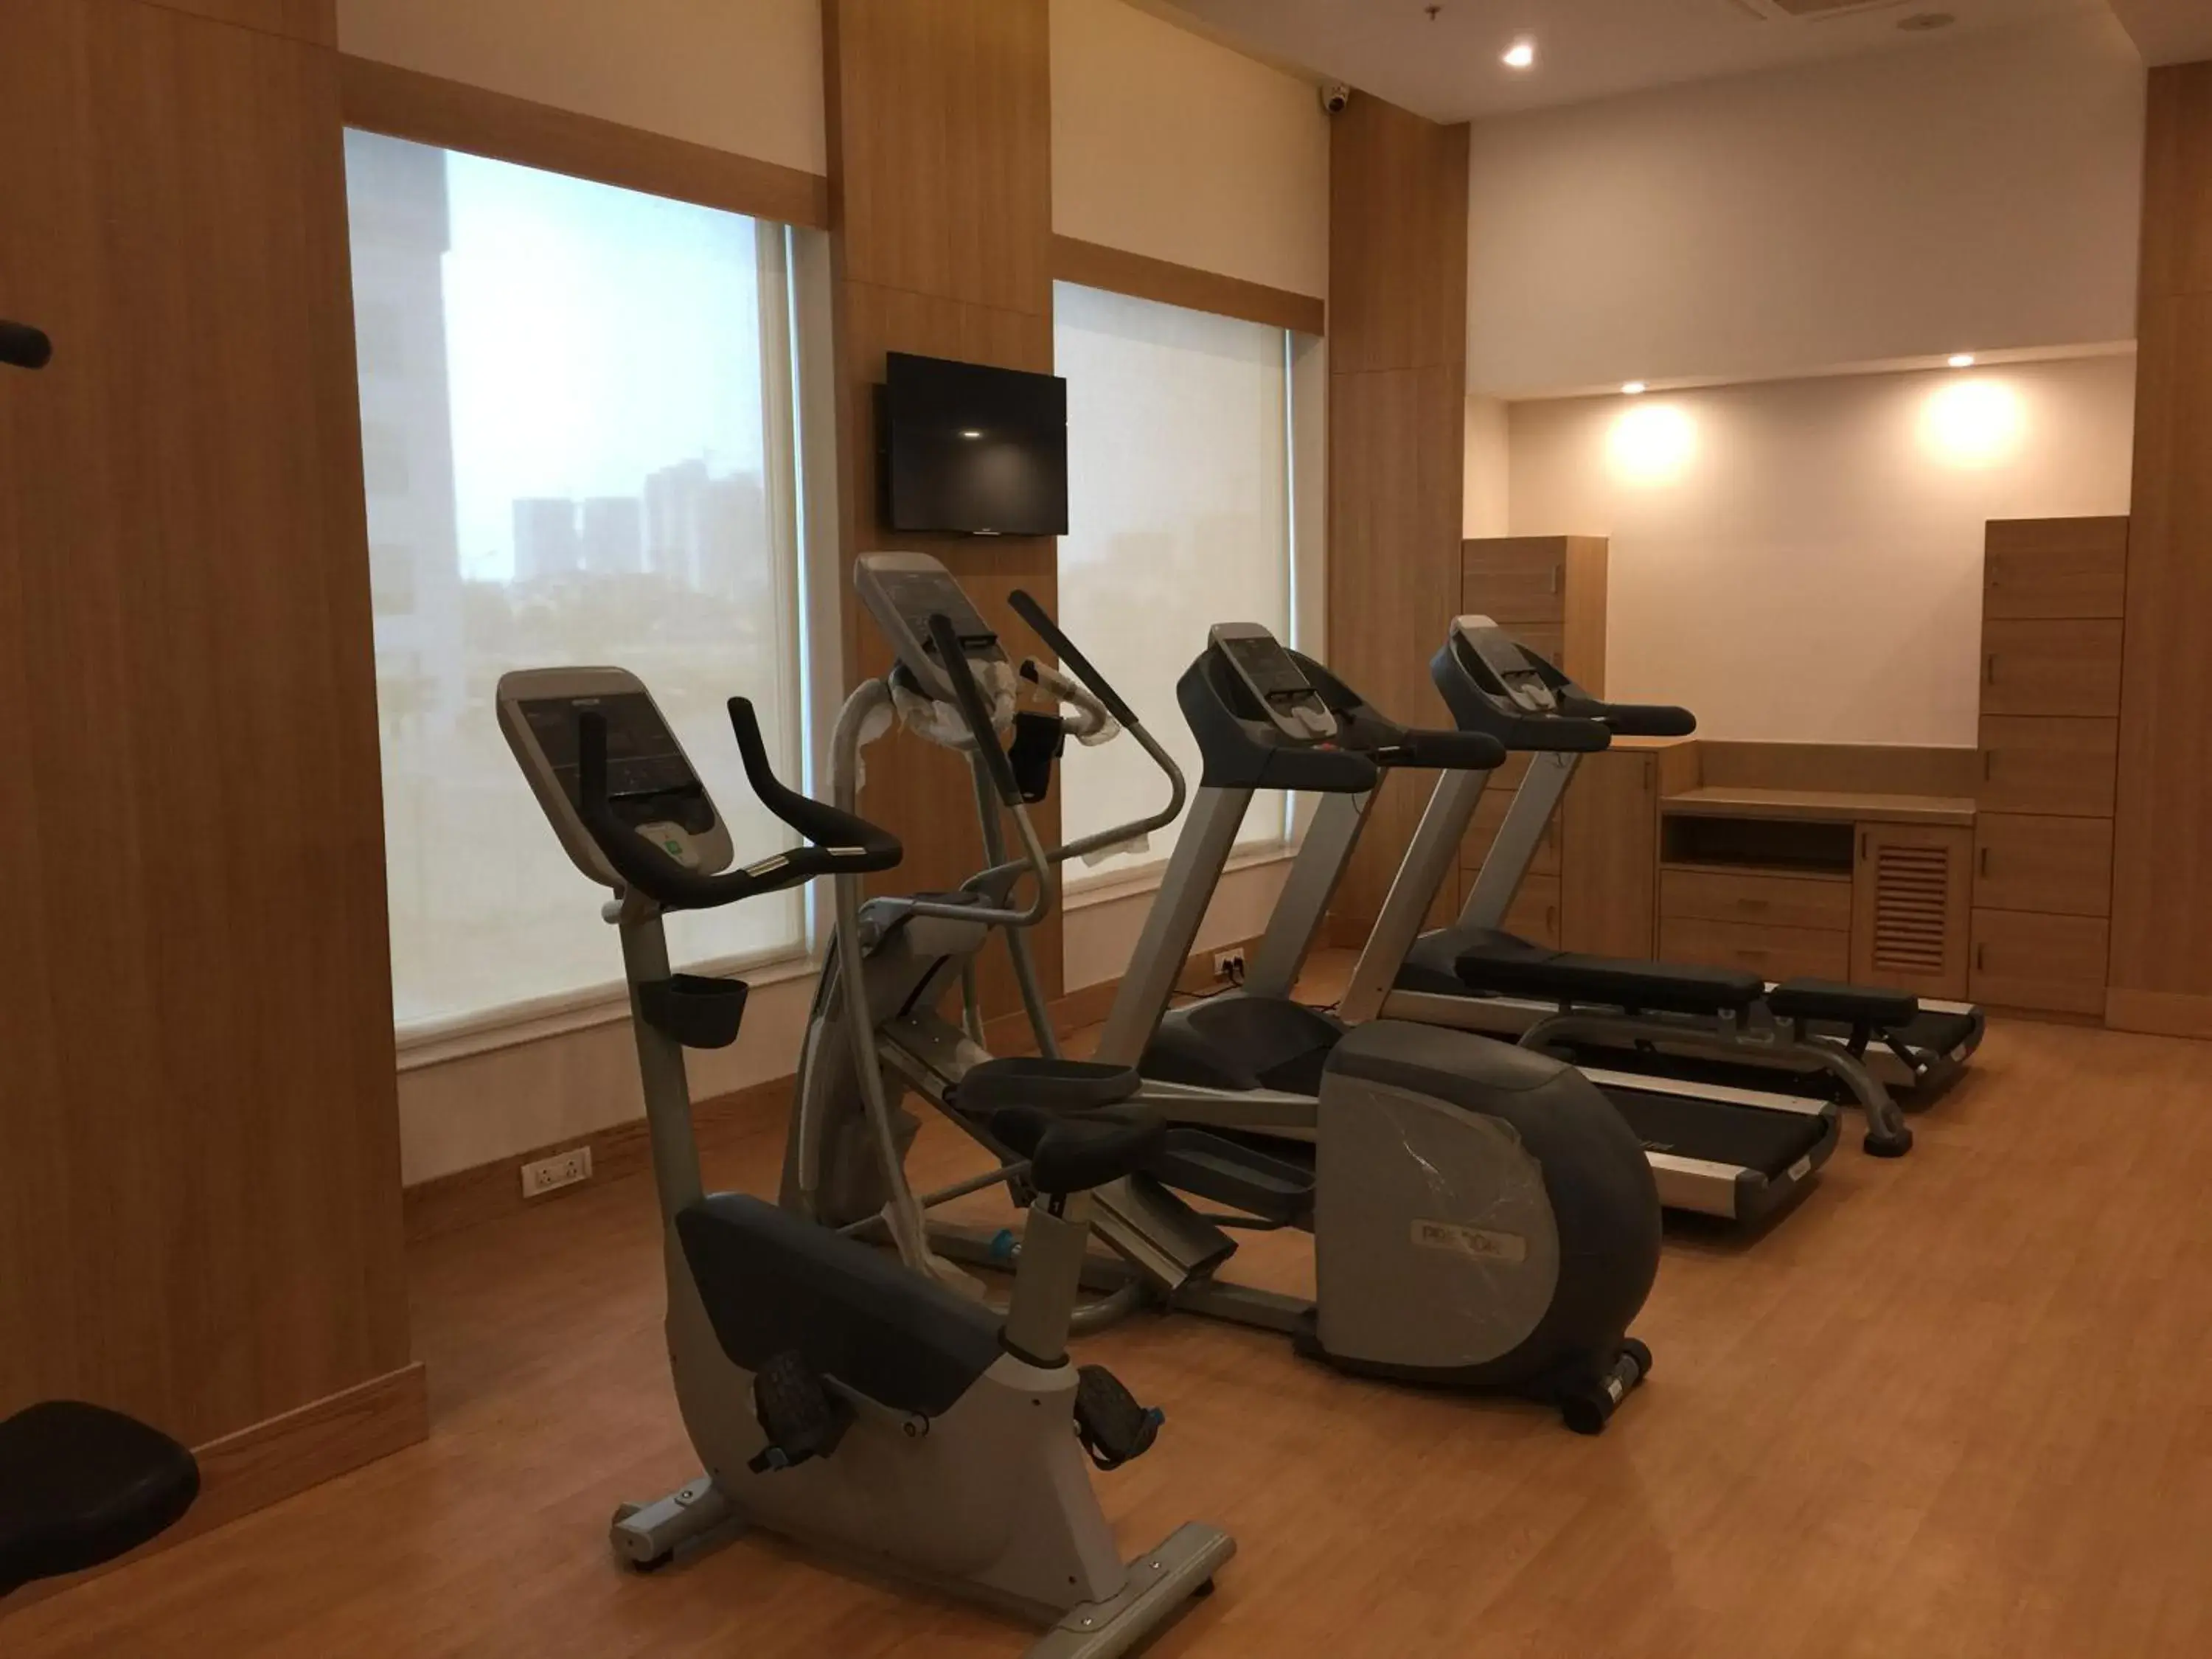 Fitness centre/facilities, Fitness Center/Facilities in Lemon Tree Hotel, Sector 60, Gurugram